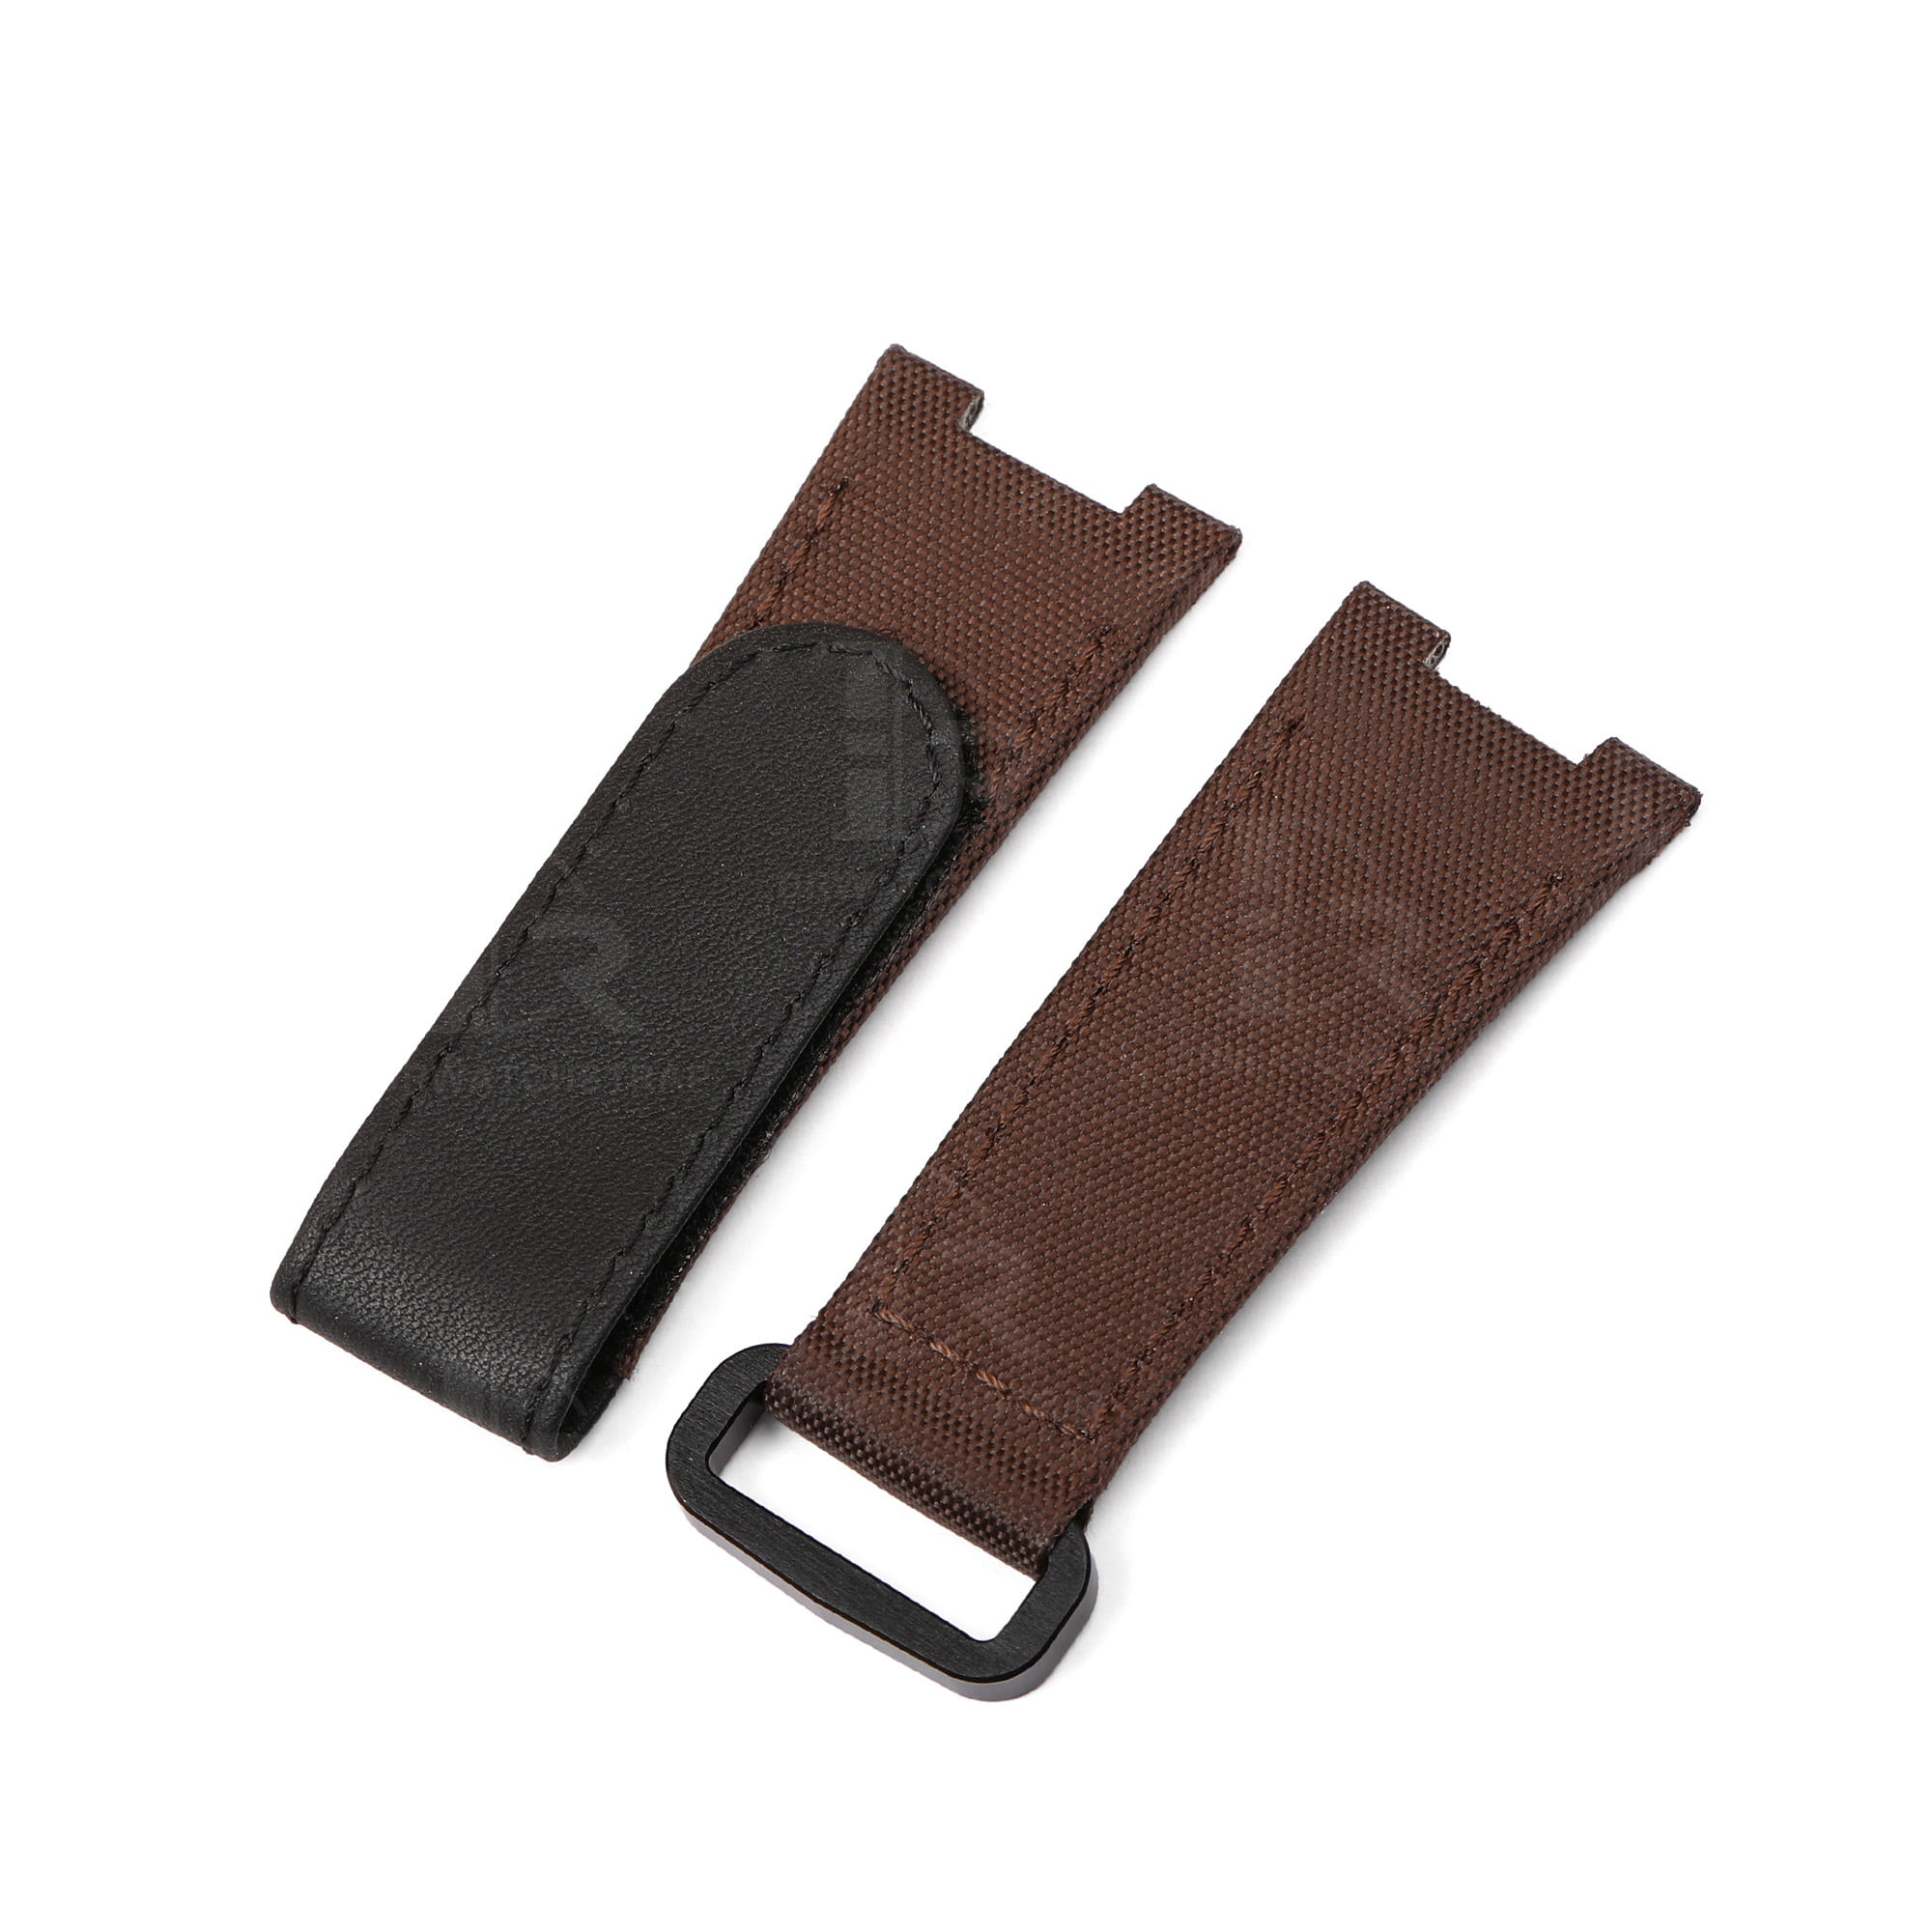 Buy Custom patek philippe nautilus 5711 Dark Brown Velcro strap Nylon for 5712 7010 Replacement for watch band